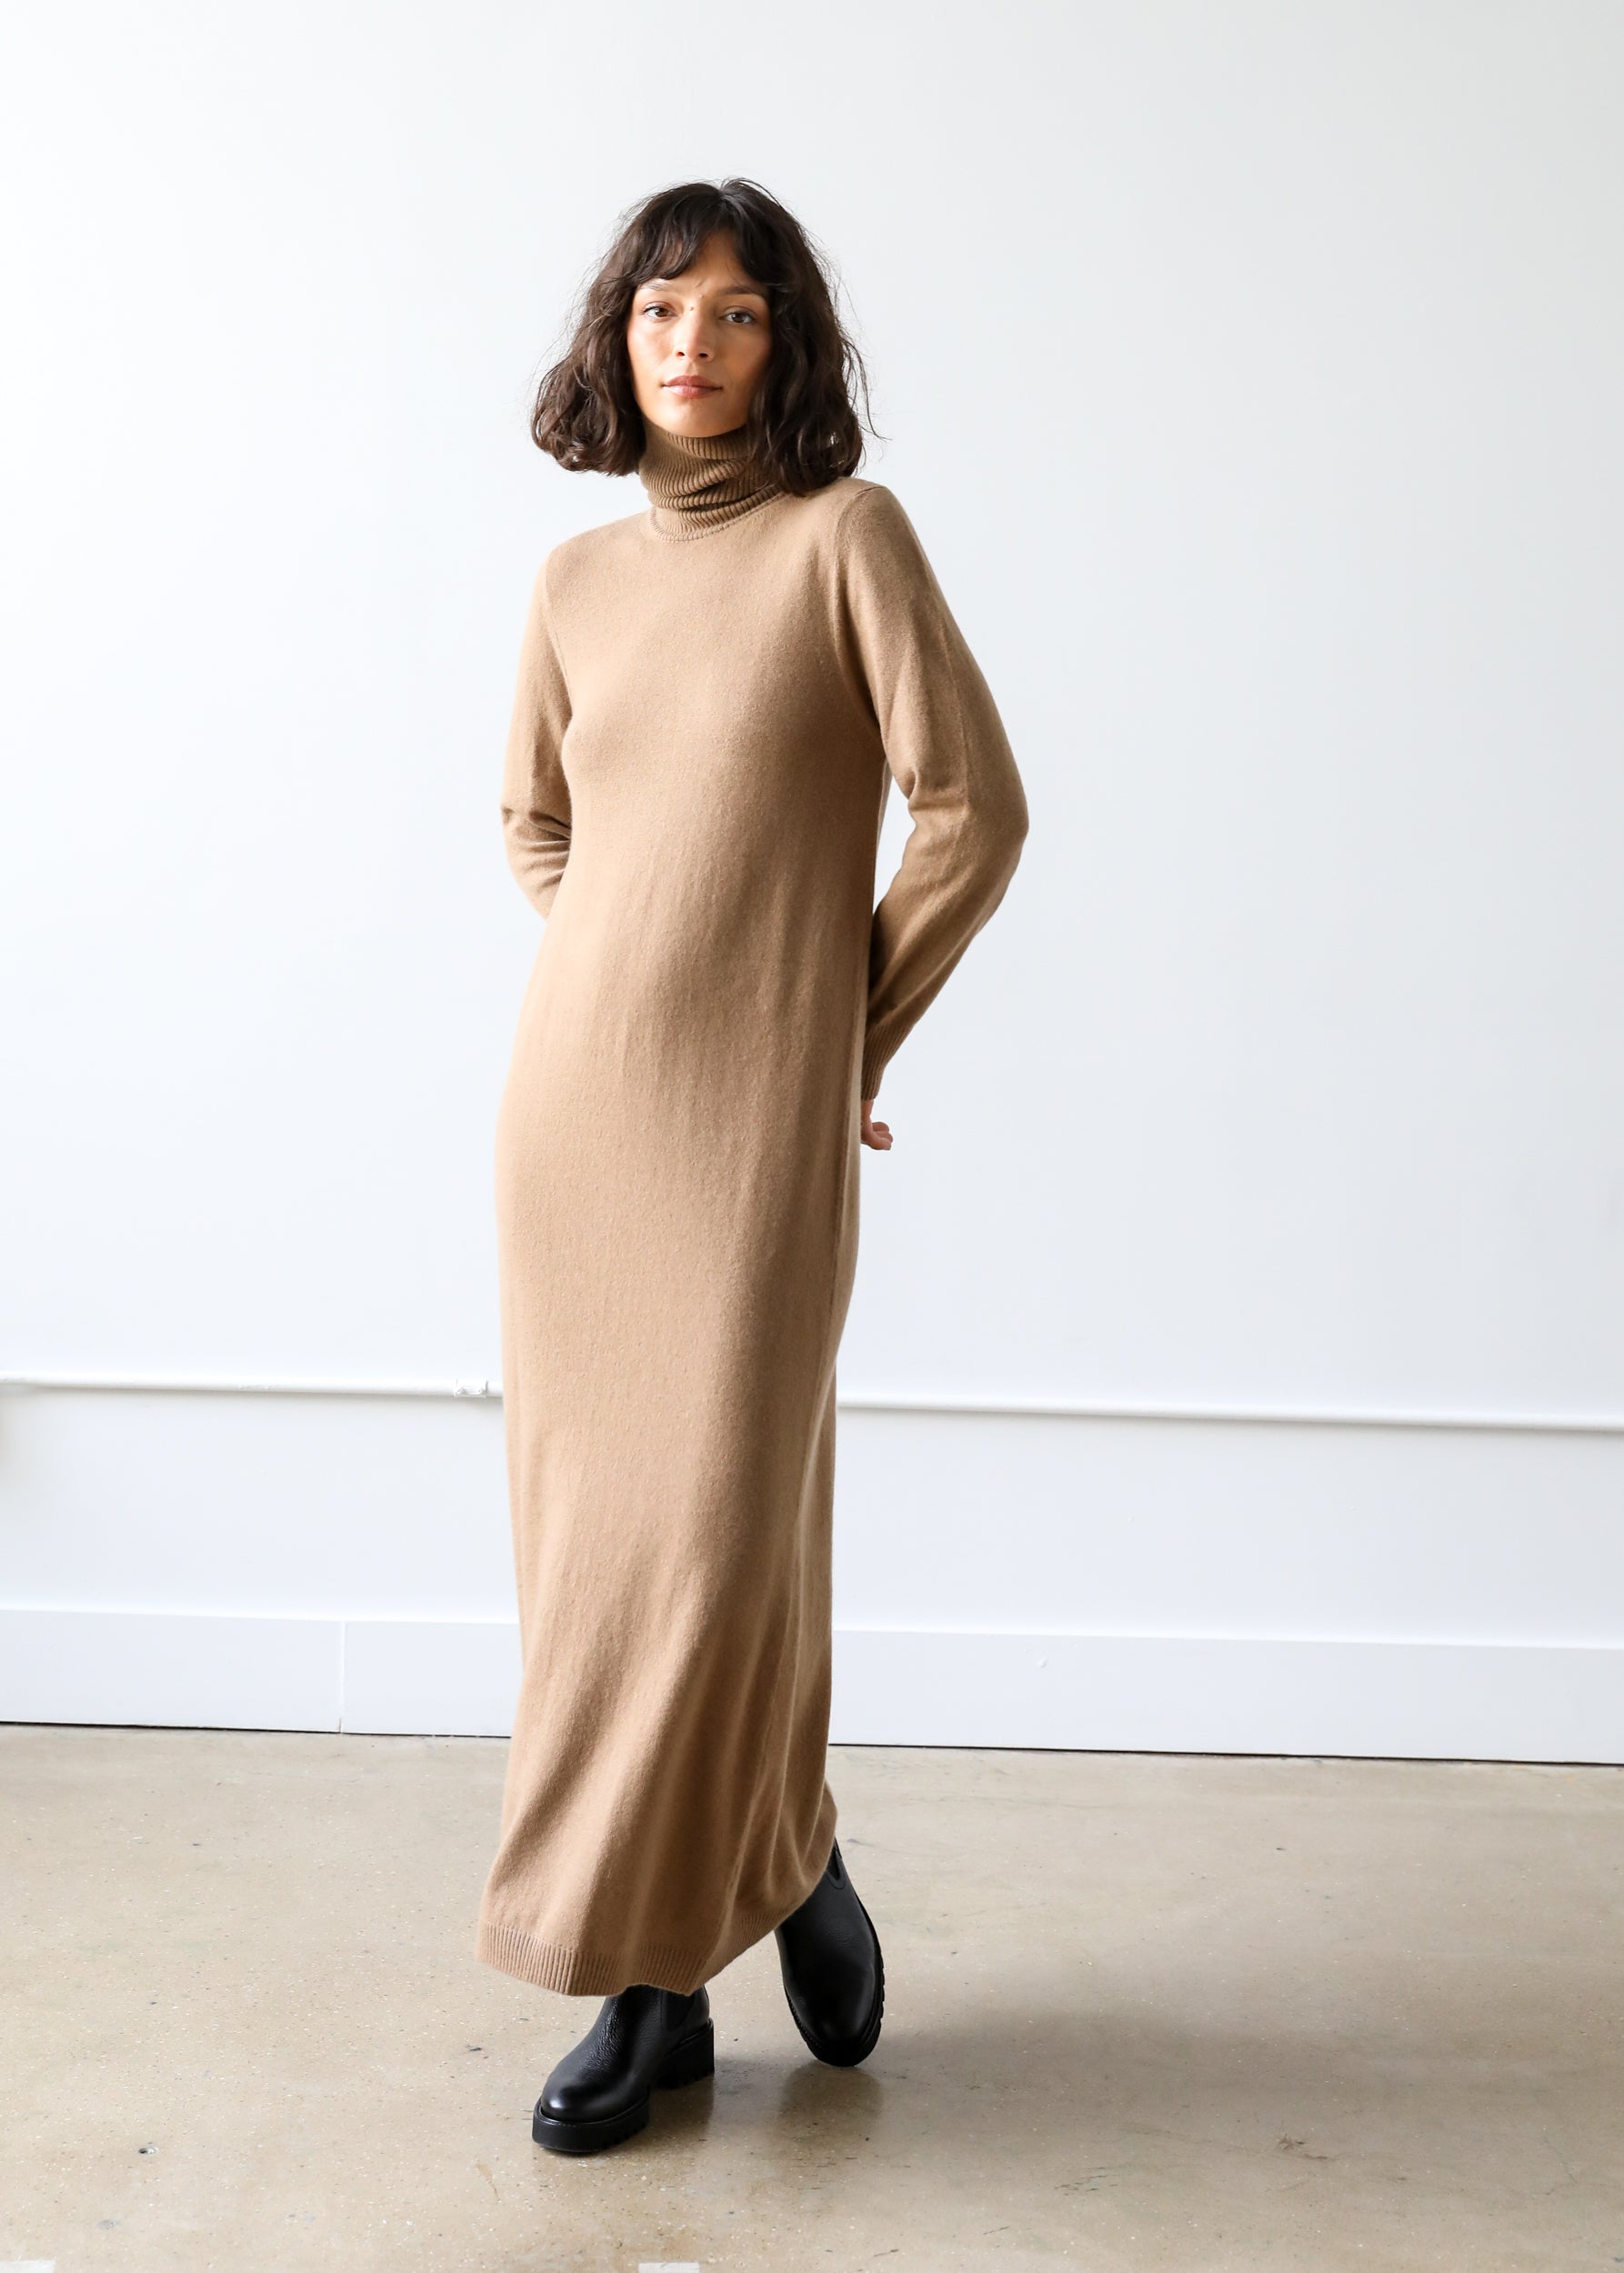 Estella NYC Lucia Turtleneck Dress in Camel Cashmere